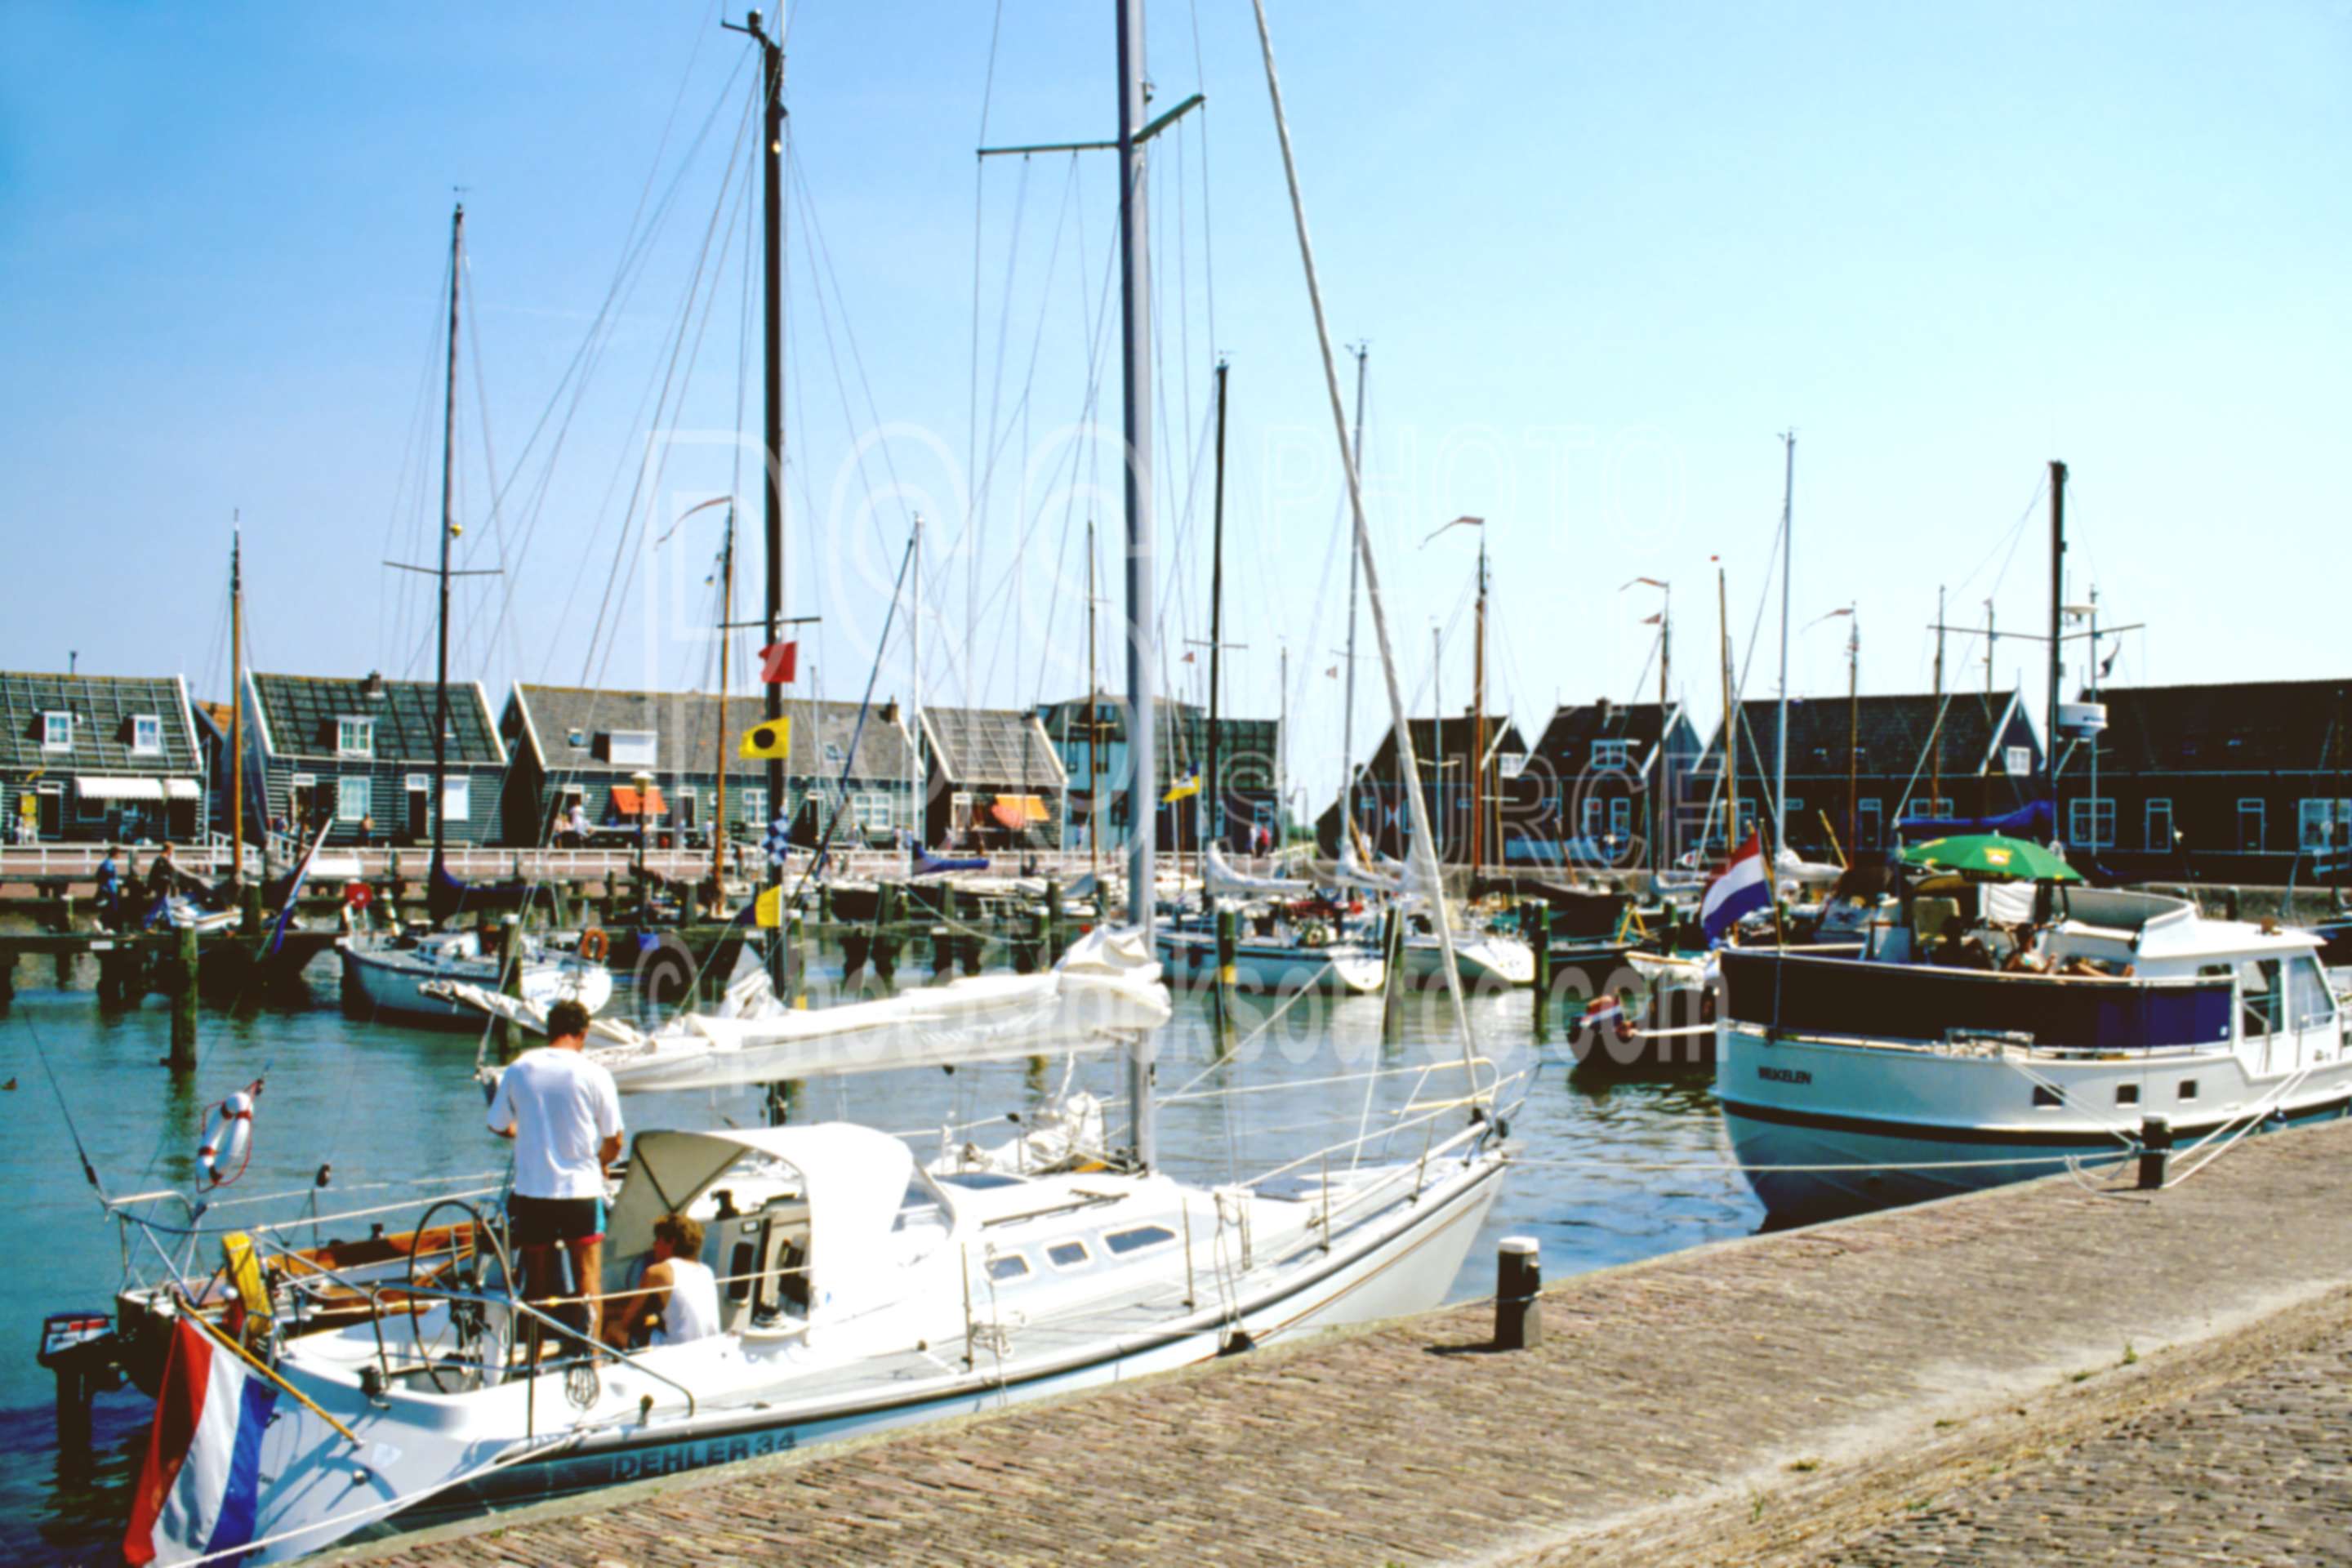 Boats in Harbor,europe,harbor,holland,boats